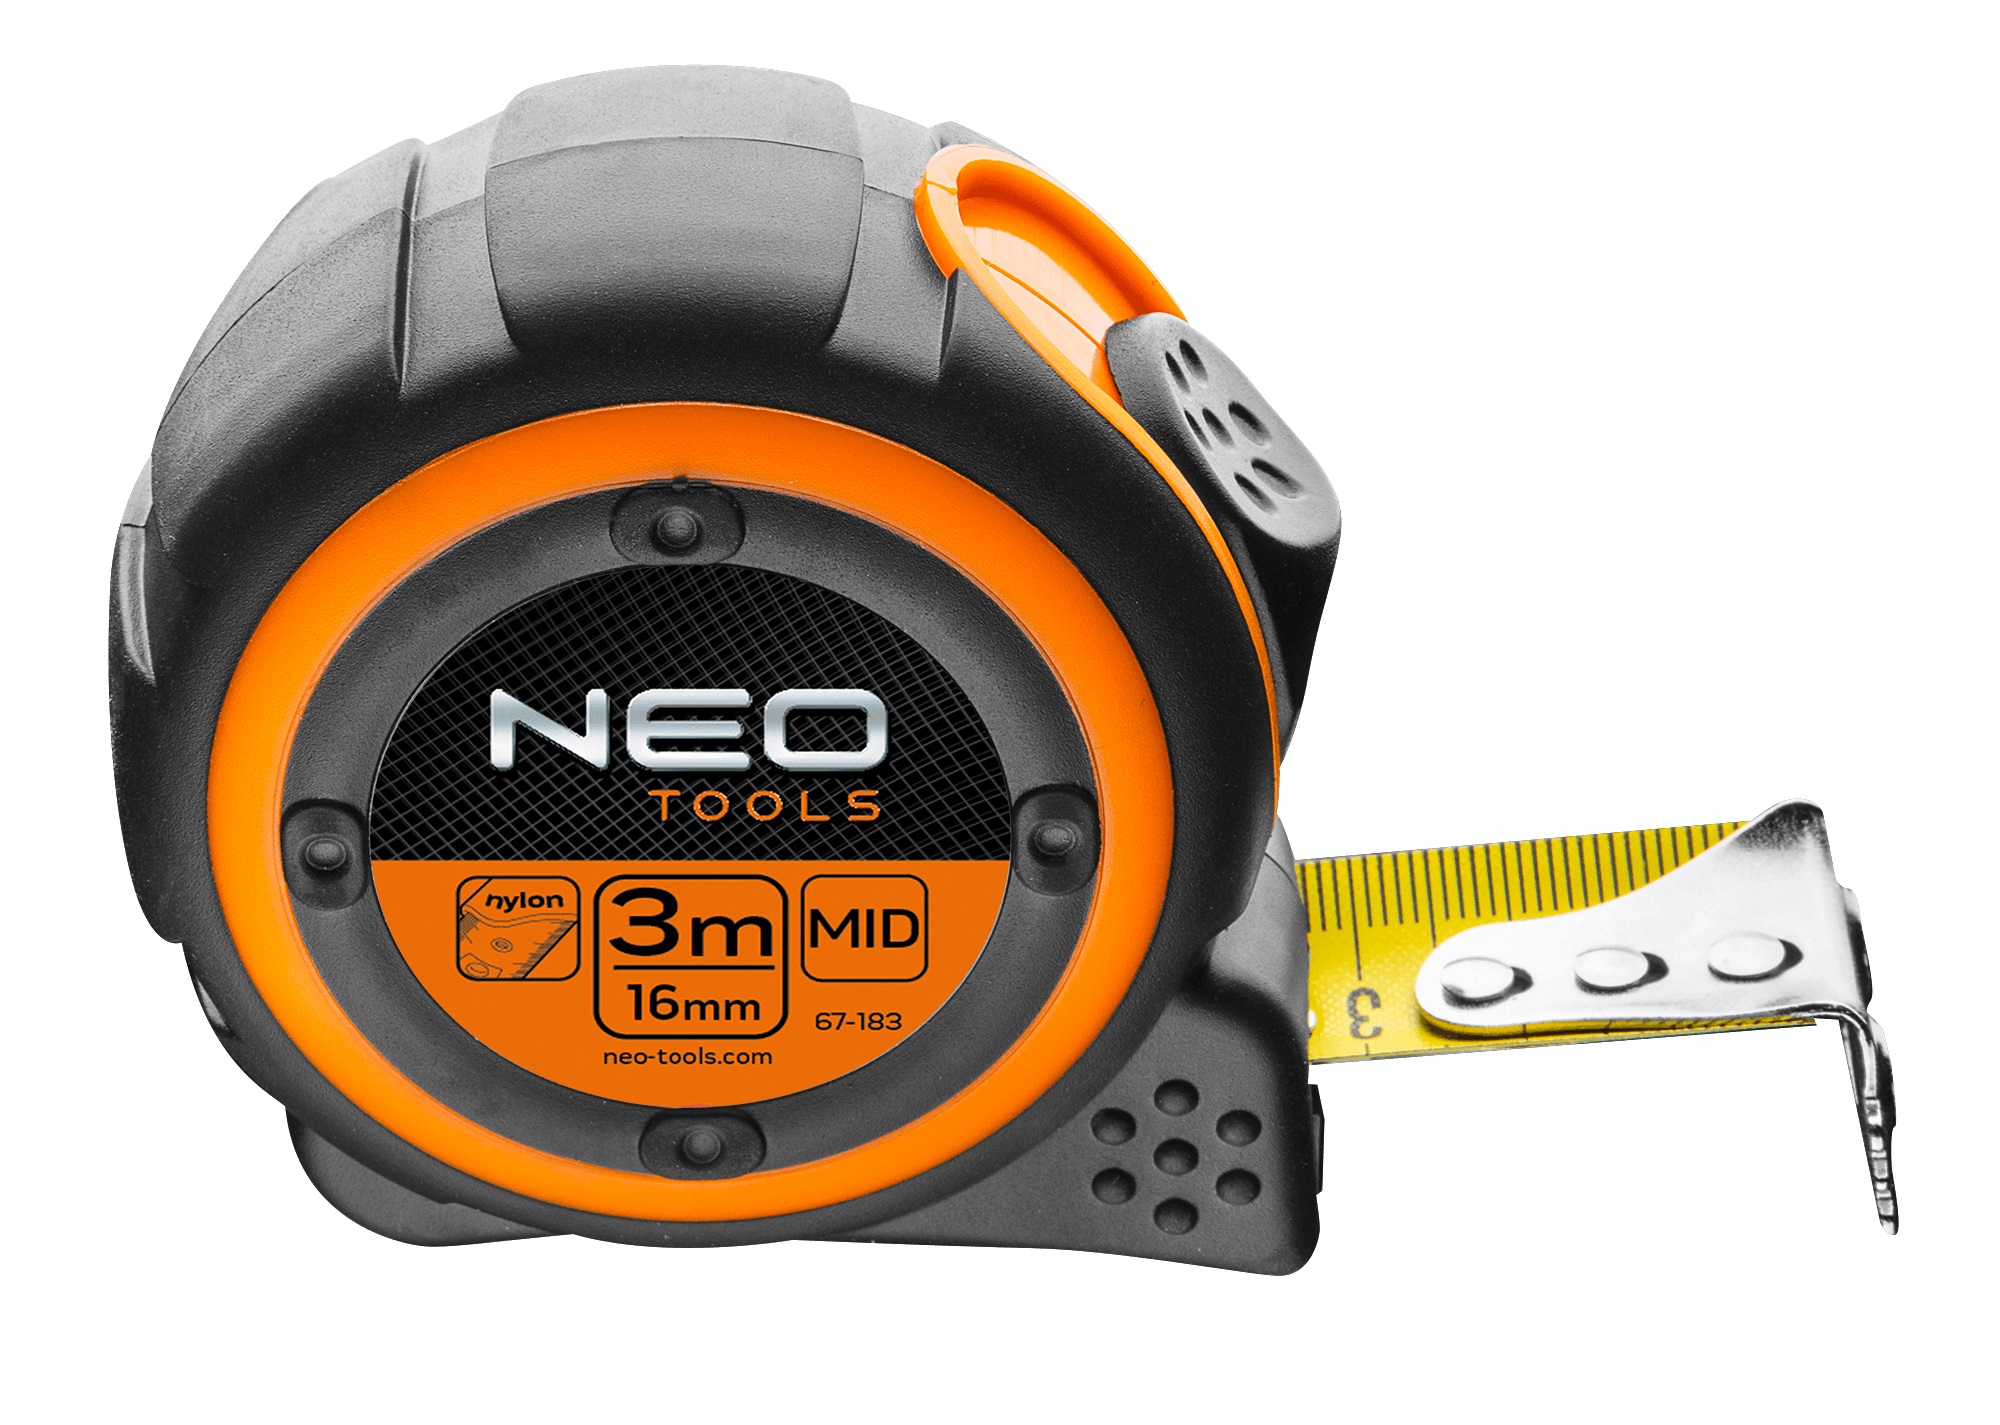 Цена рулетка Neo Tools 67-183 в Киеве